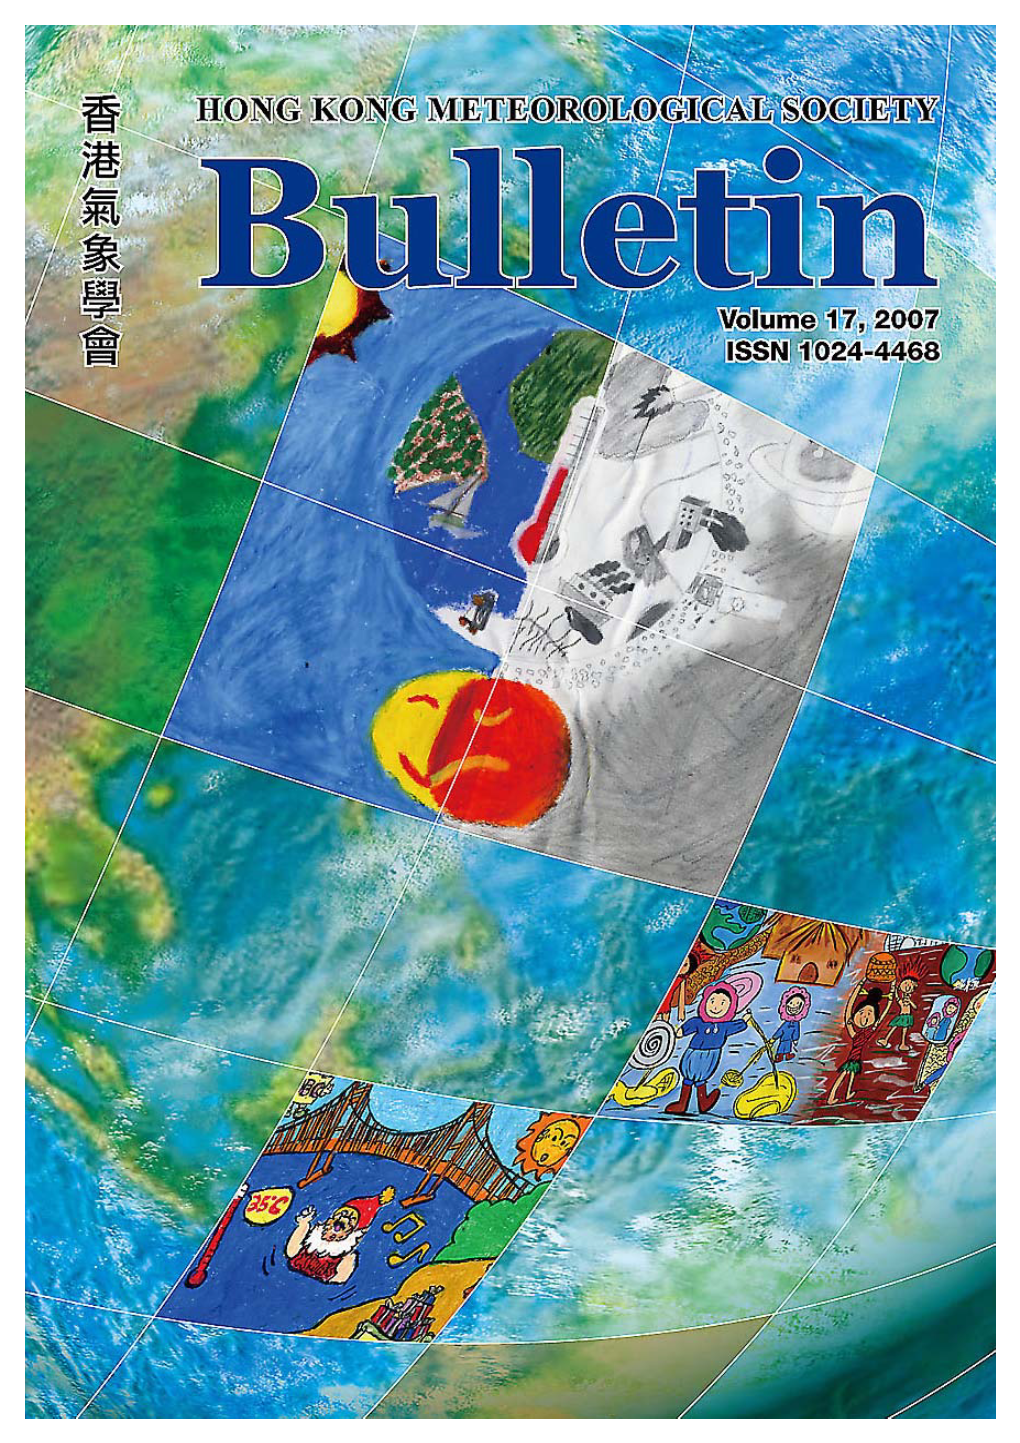 Hkmets Bulletin, Volume 17, 2007